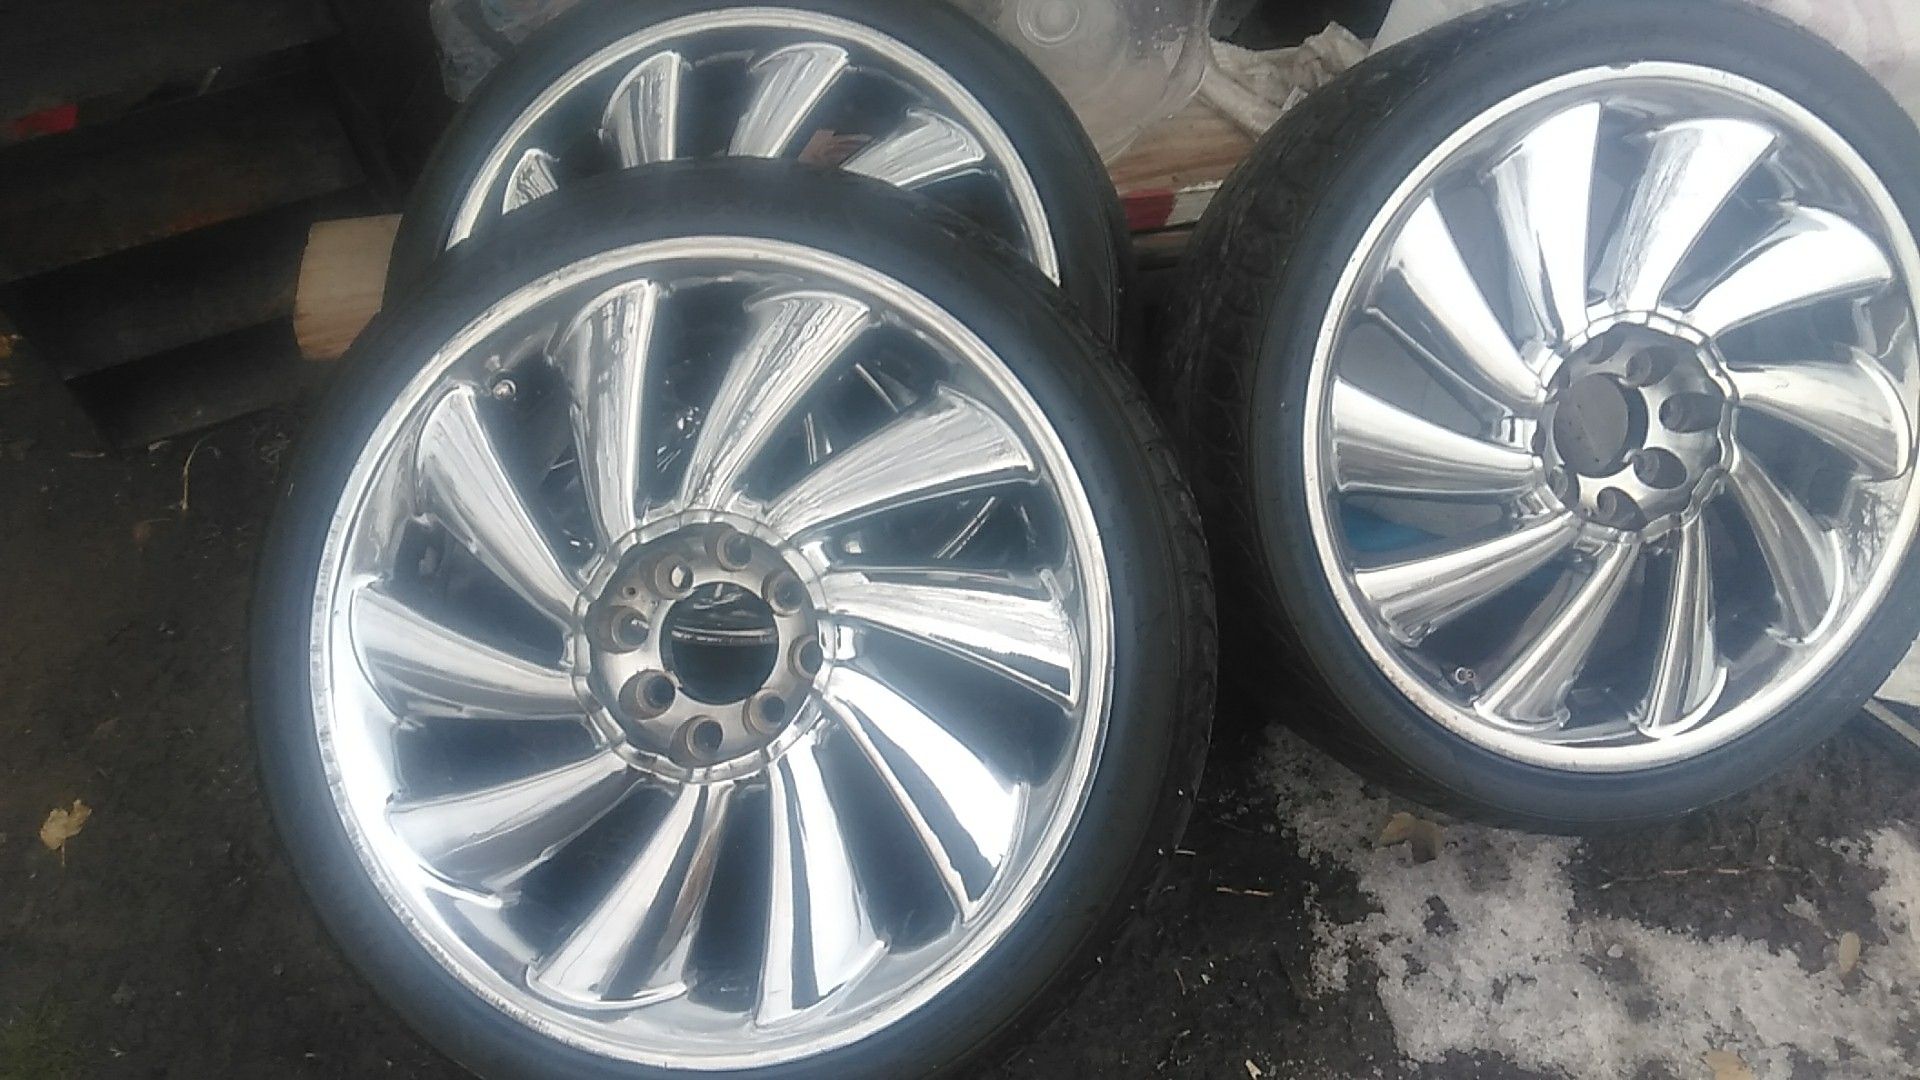 4 lug universal rims whith low profile tires